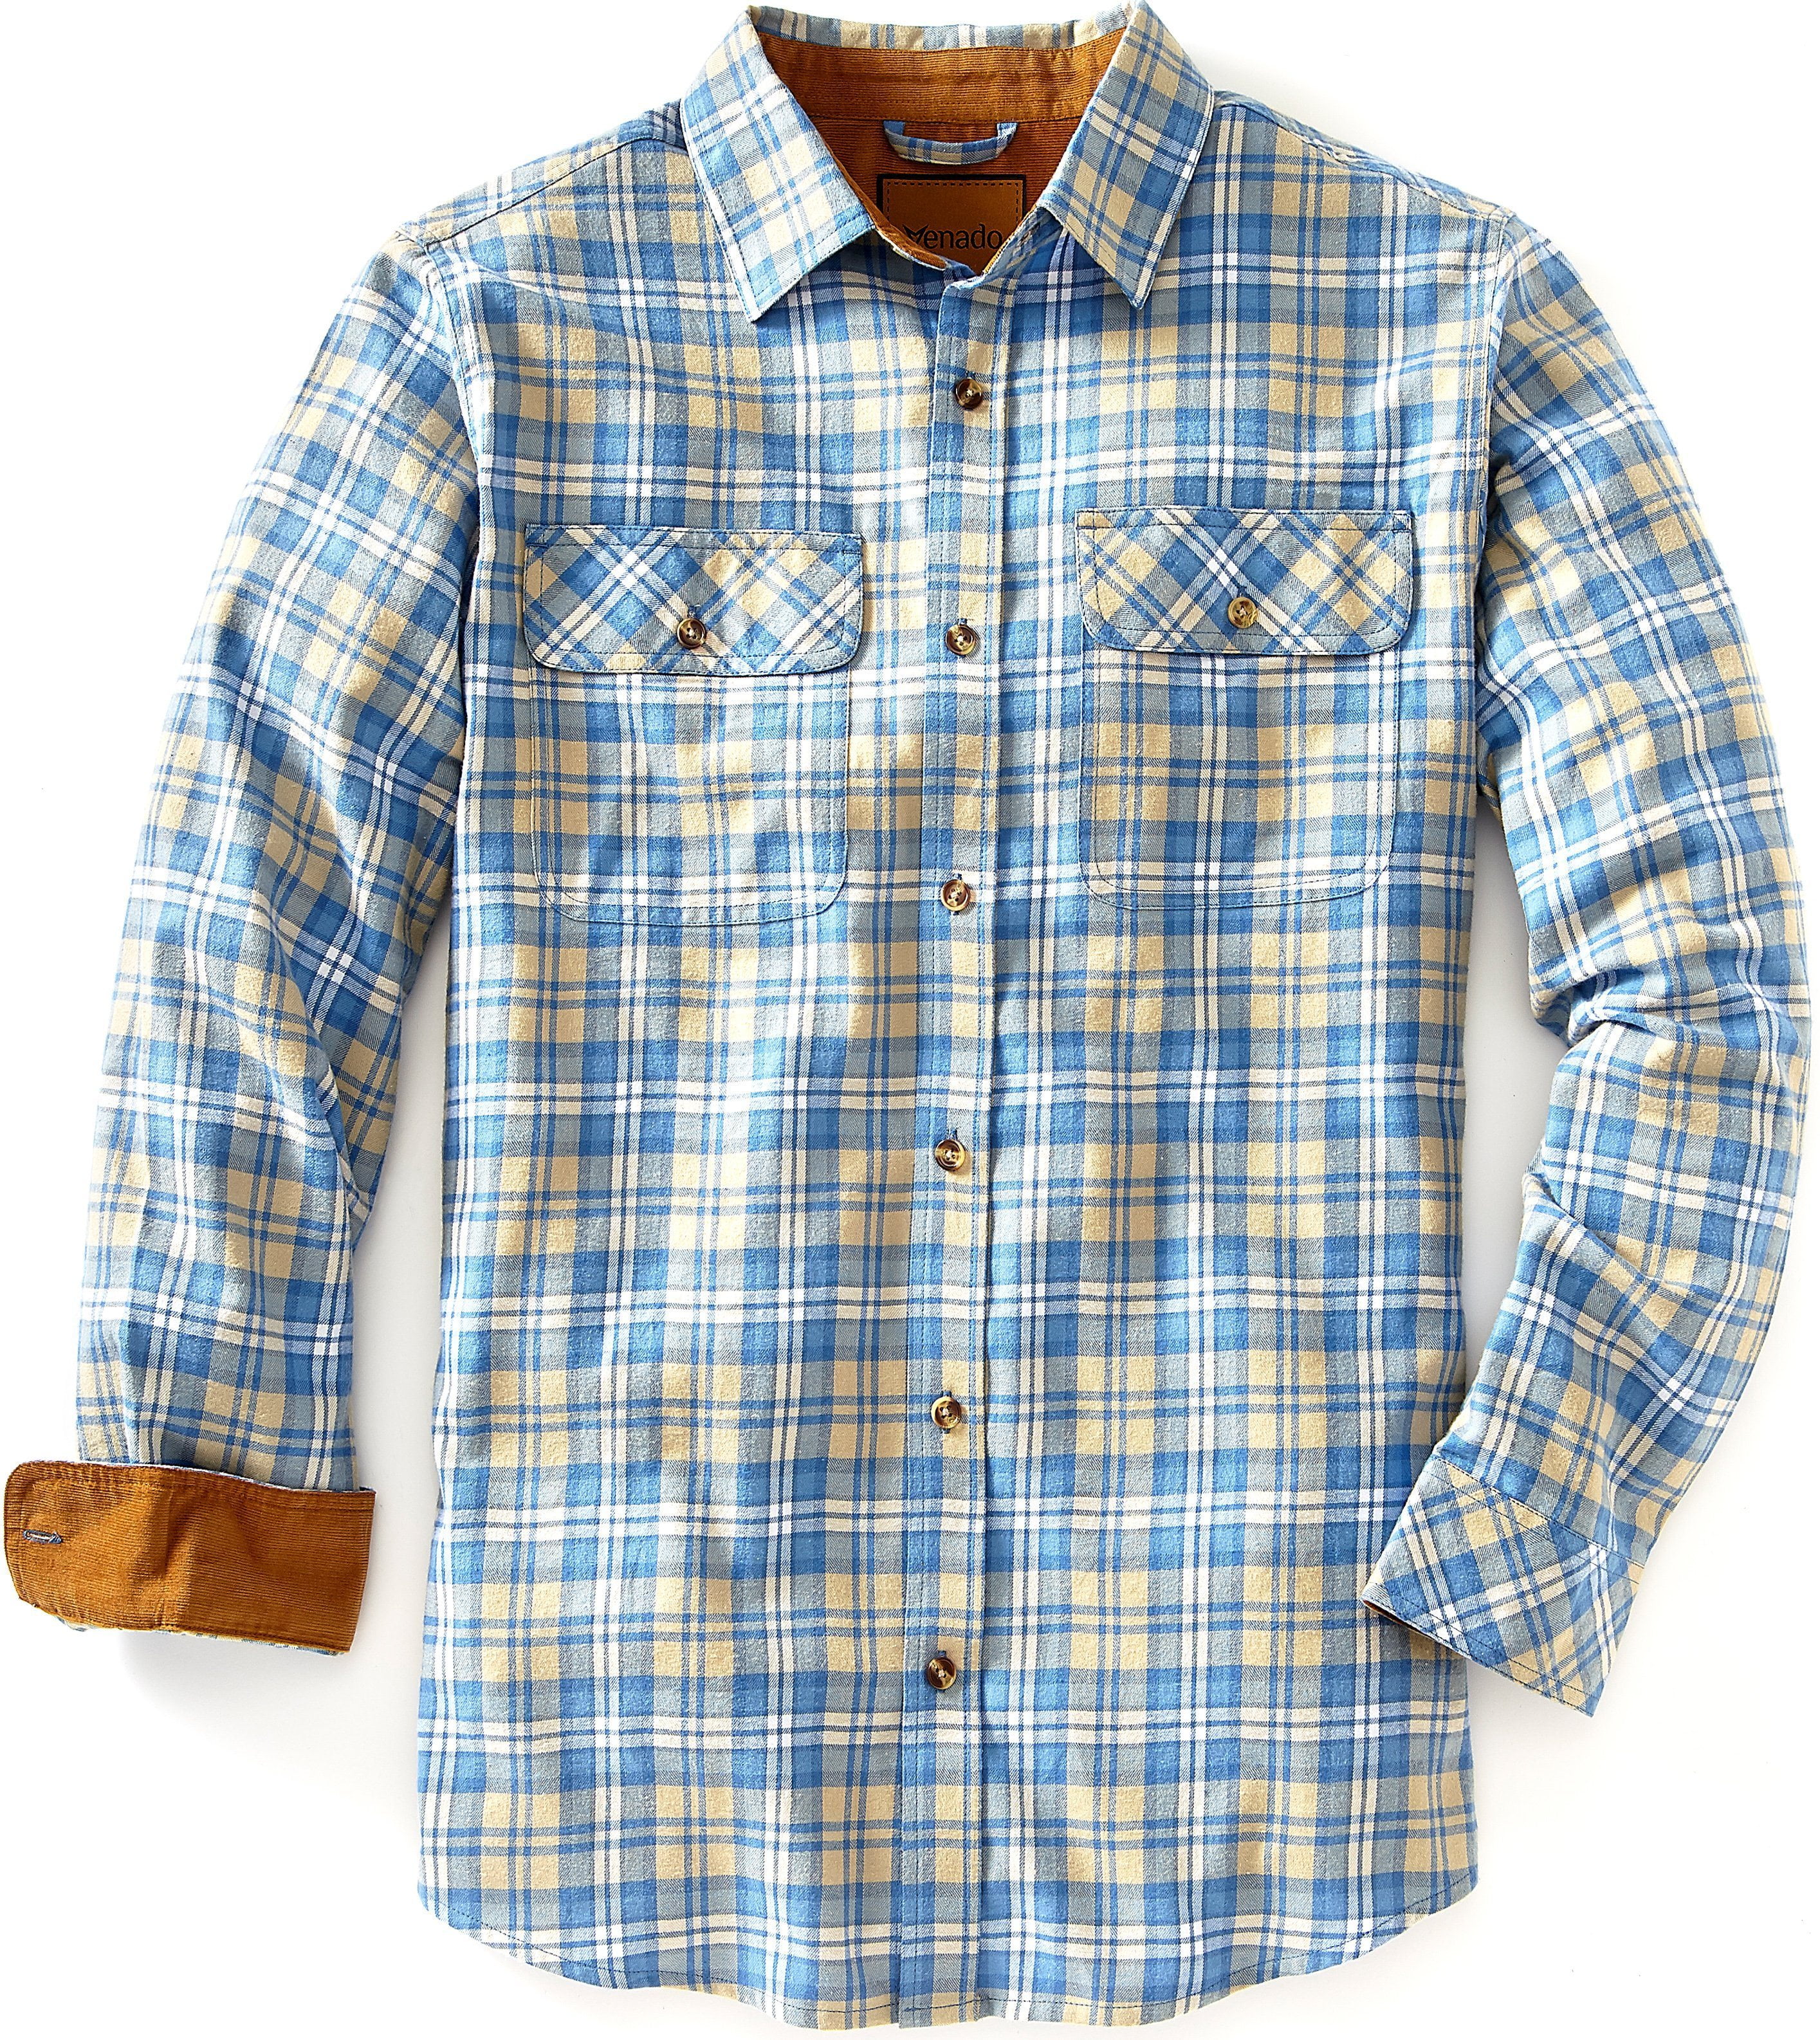 Venado Flannel Shirt for Men - Men's Plaid Shirt with Full Reach Gusset ...